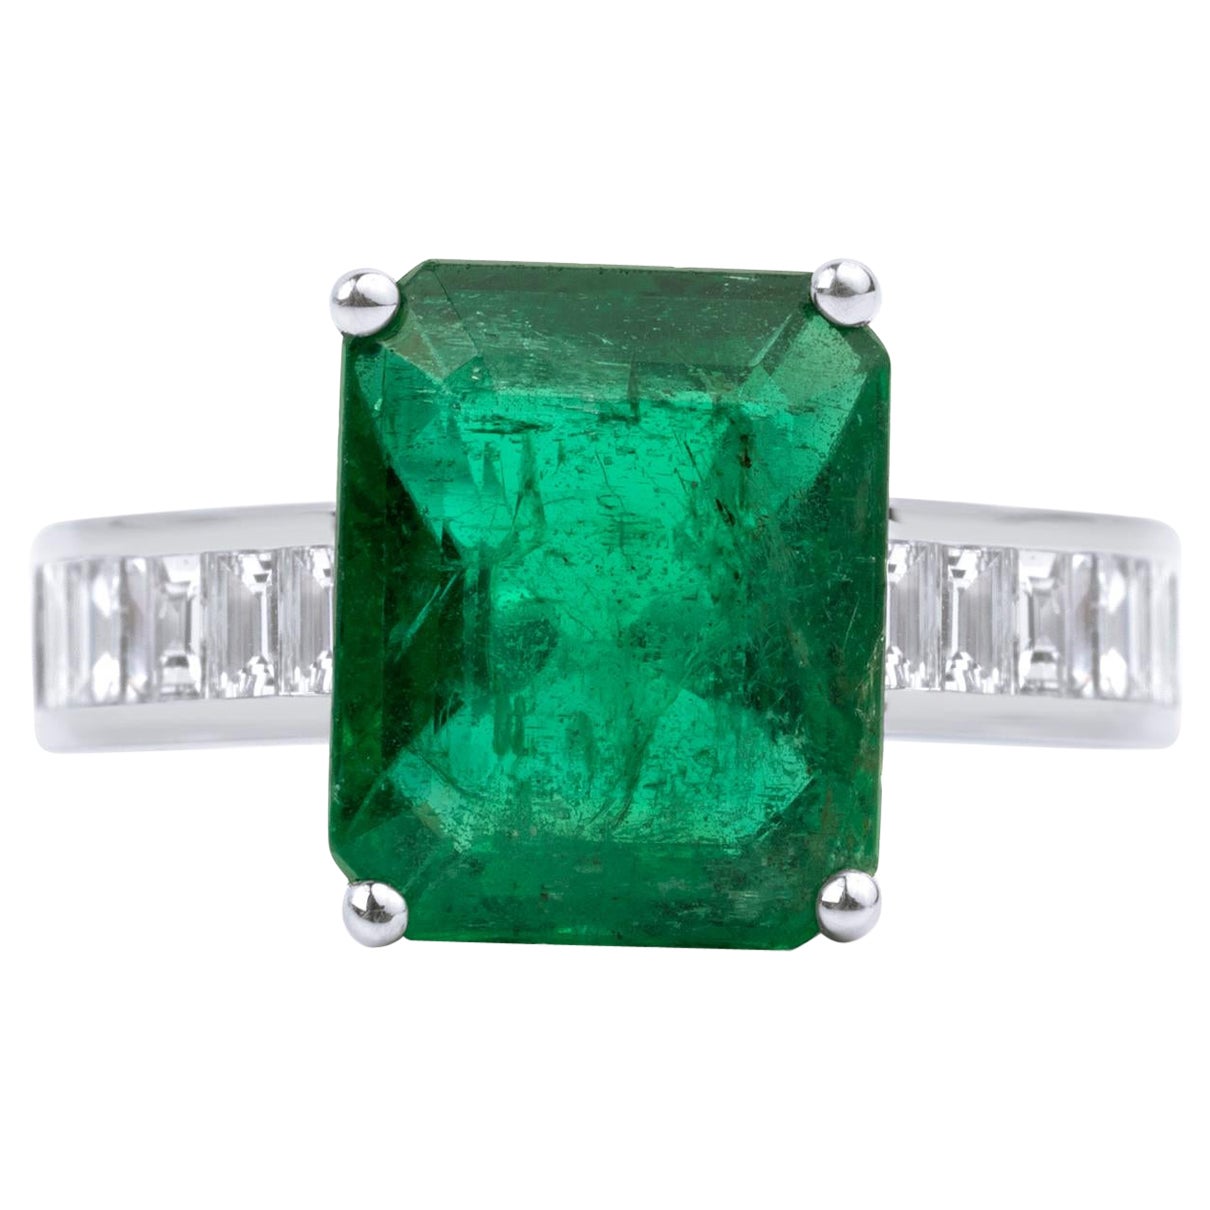 4.5 Carat Natural Emerald Diamond Cocktail Engagement Ring 18k White Gold